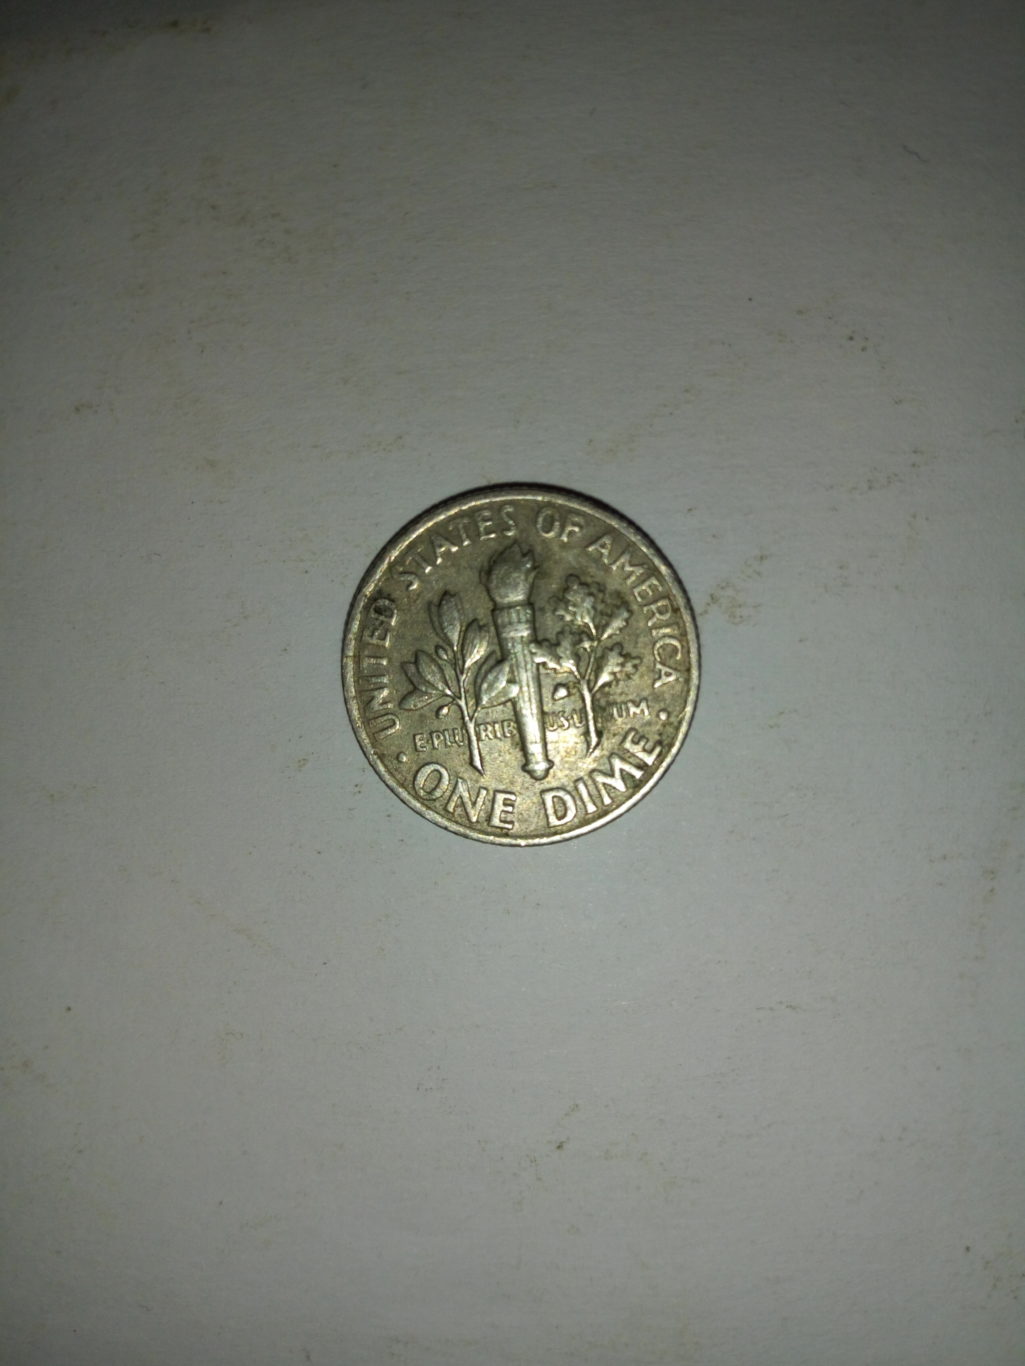 1967_united States of America 1 dime